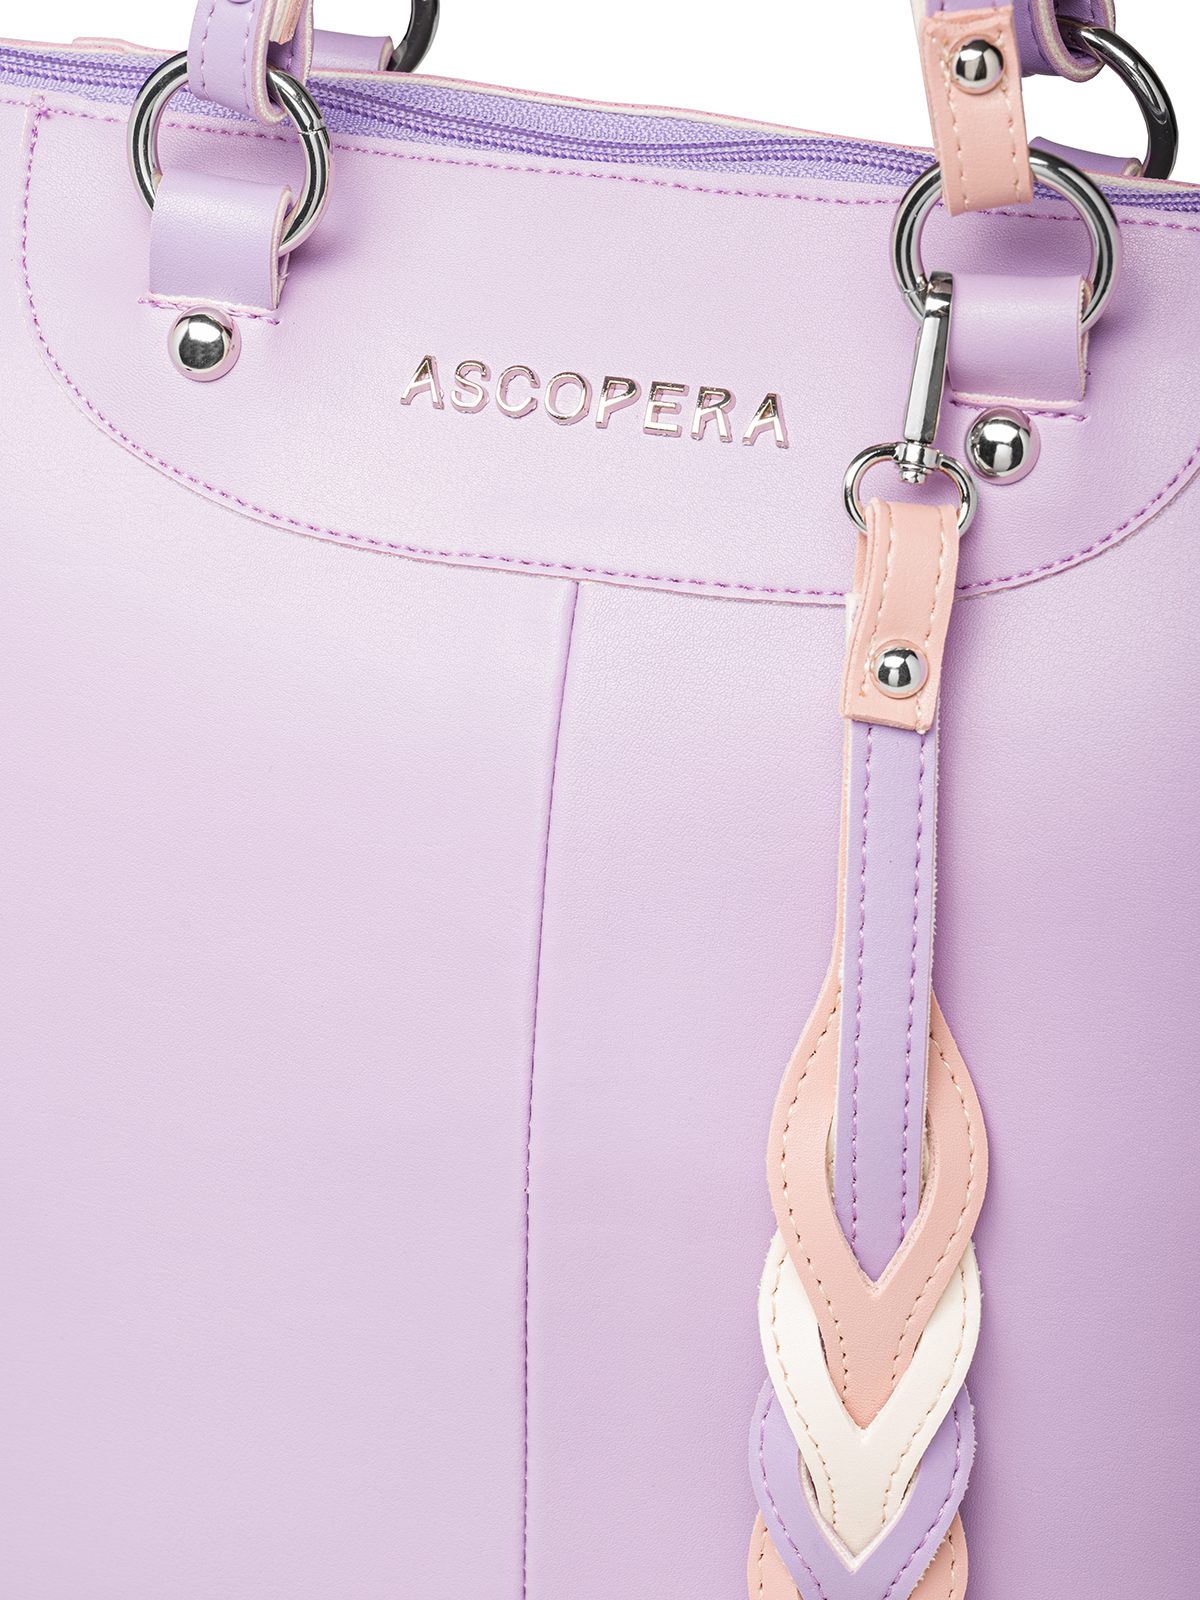 Ascopera dámská kabelka Utrimque, Ultra Violet